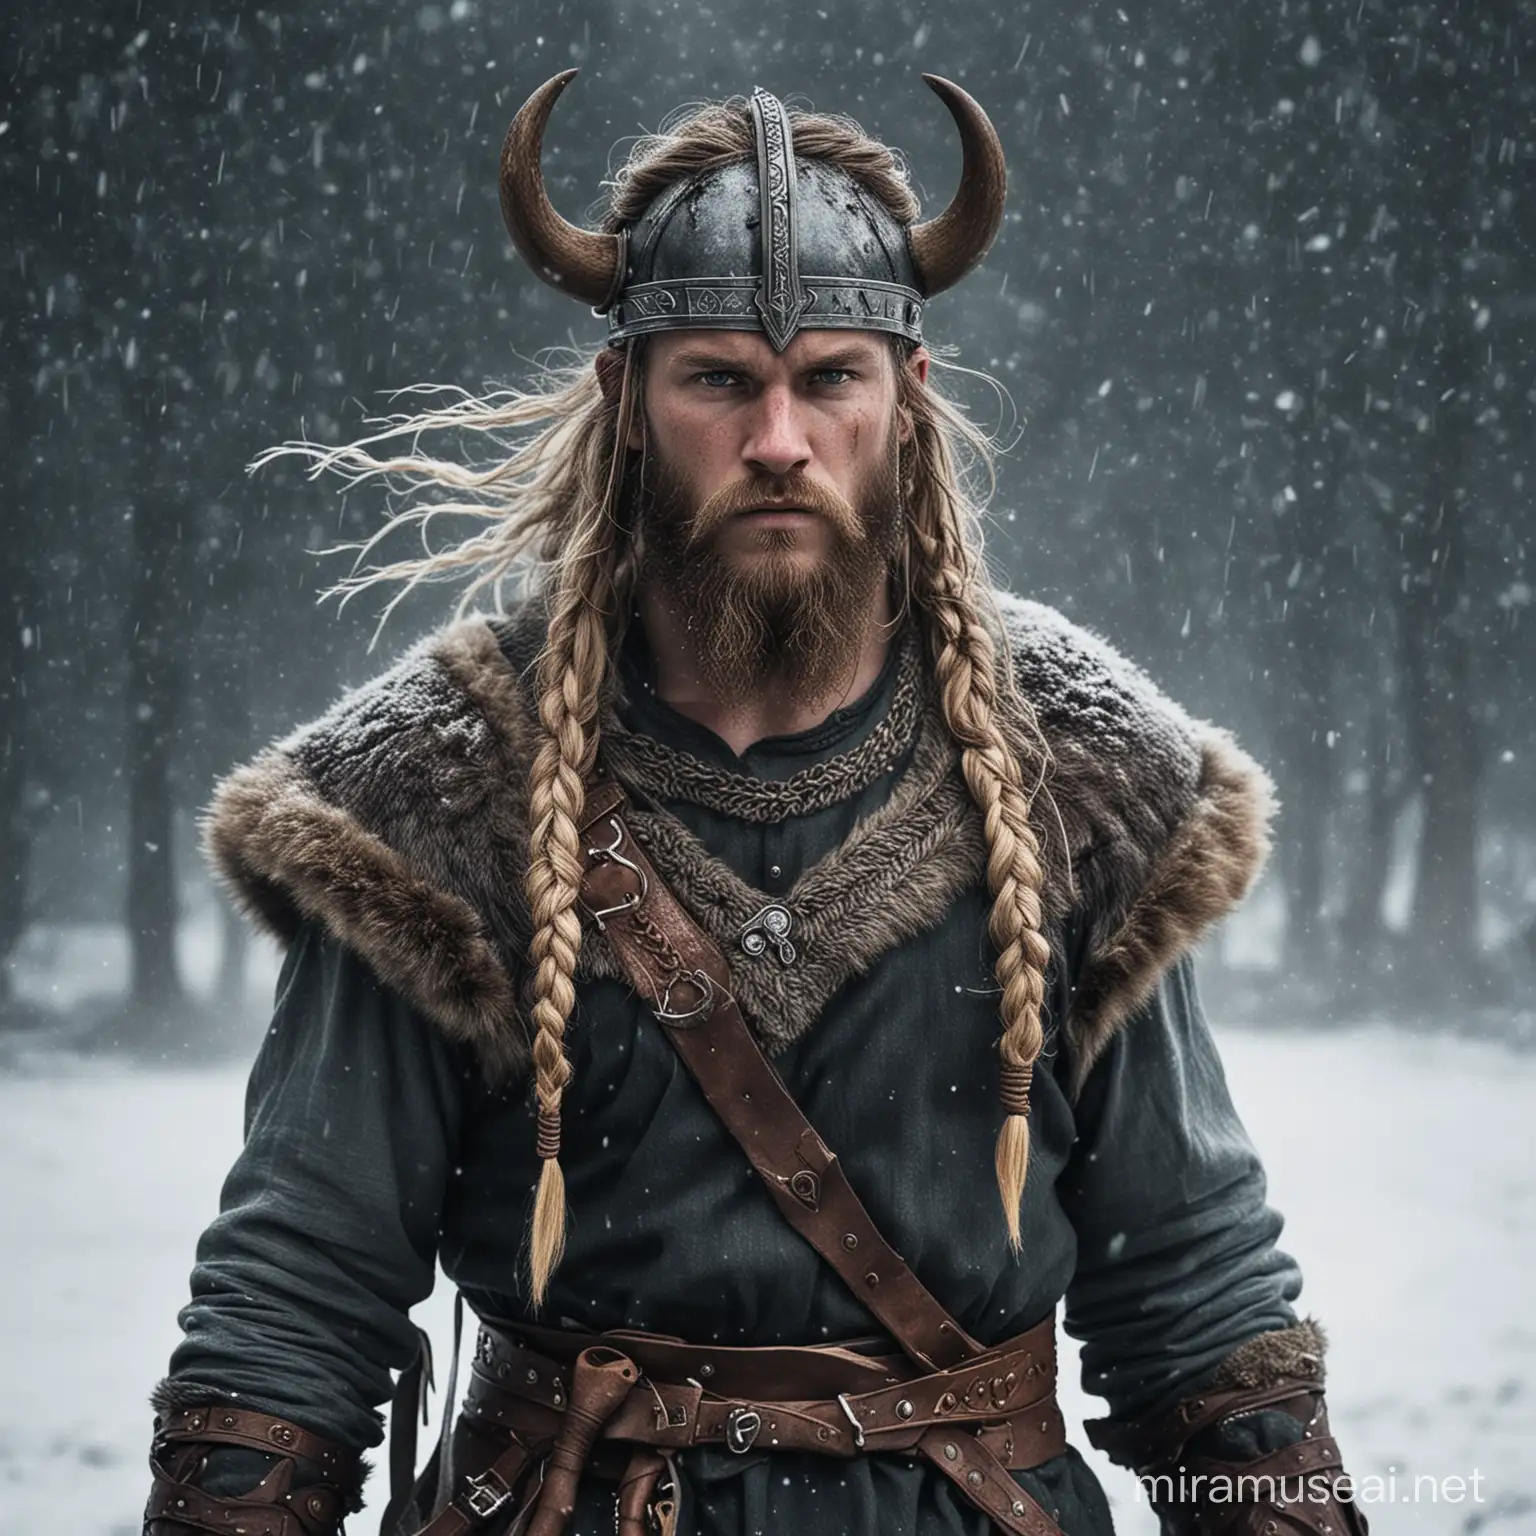 Fierce Viking Warrior Battling Blizzard with Axe